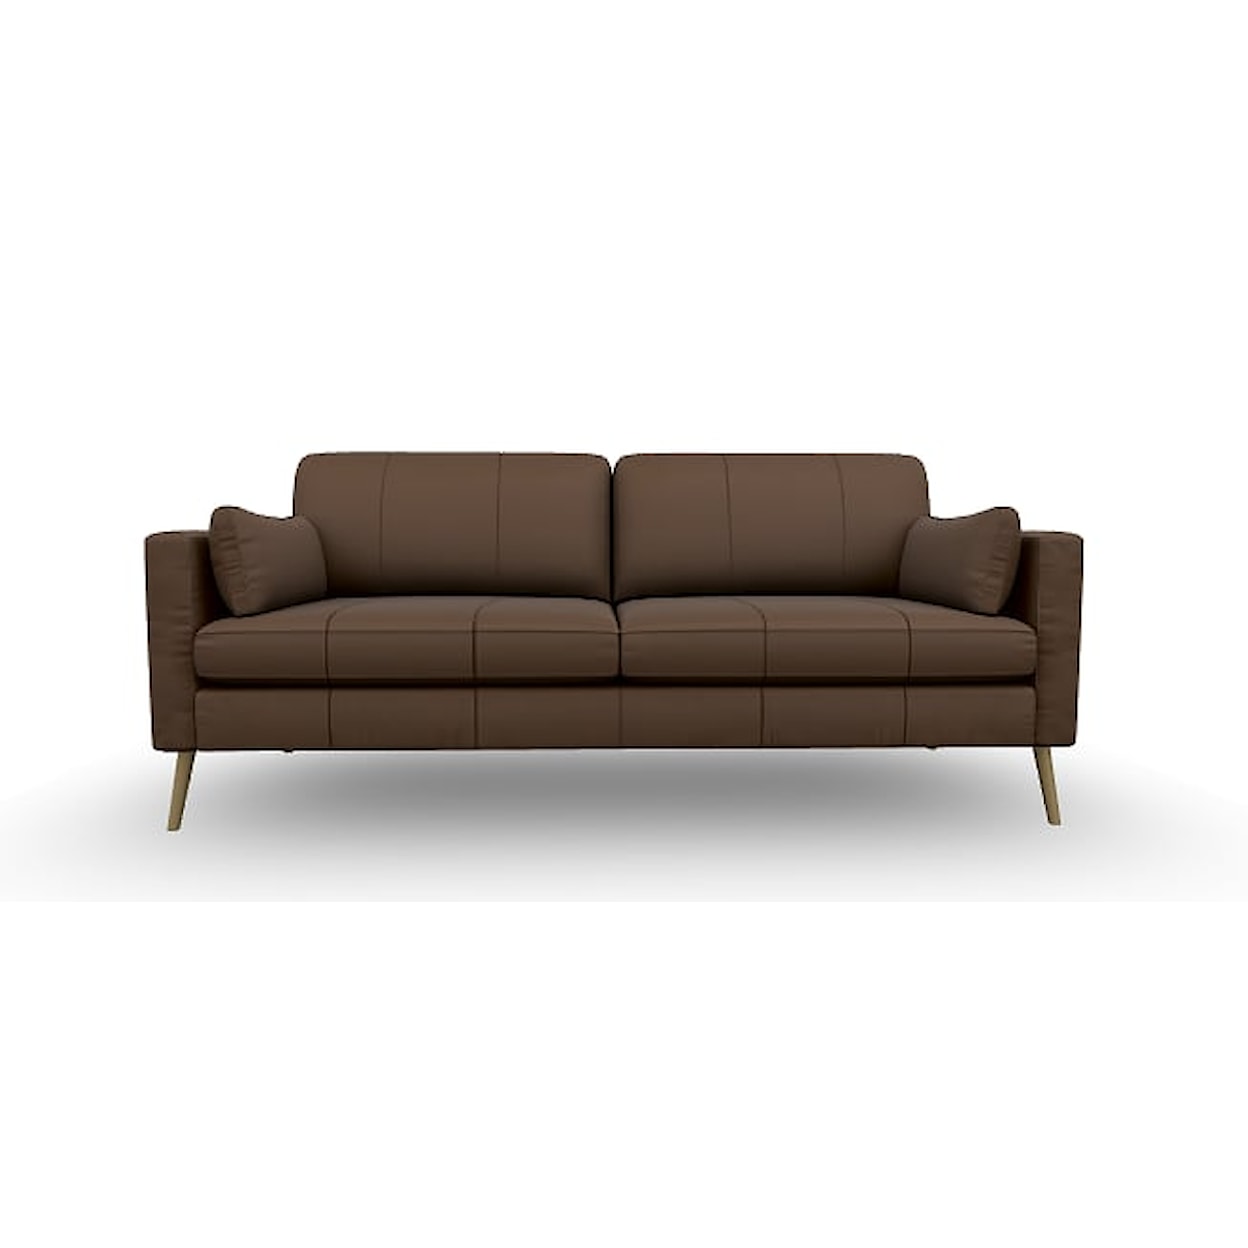 Bravo Furniture Trafton Sofa